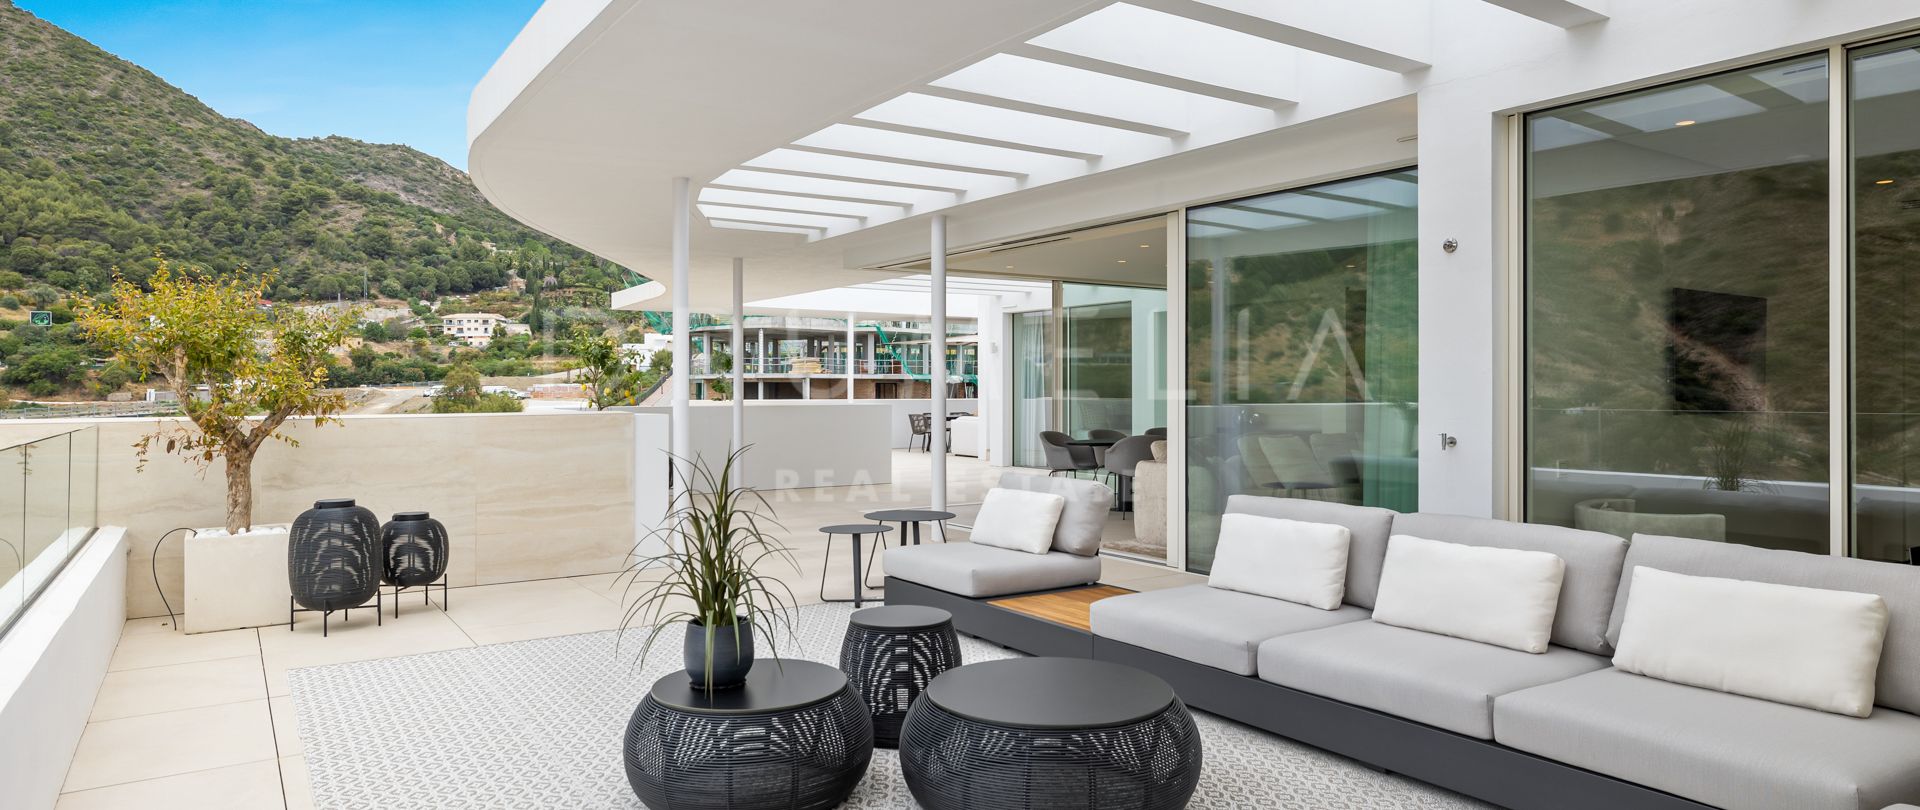 Wunderschönes modernes Luxus-Penthouse mit Panoramablick auf das Meer in Palo Alto, Ojen